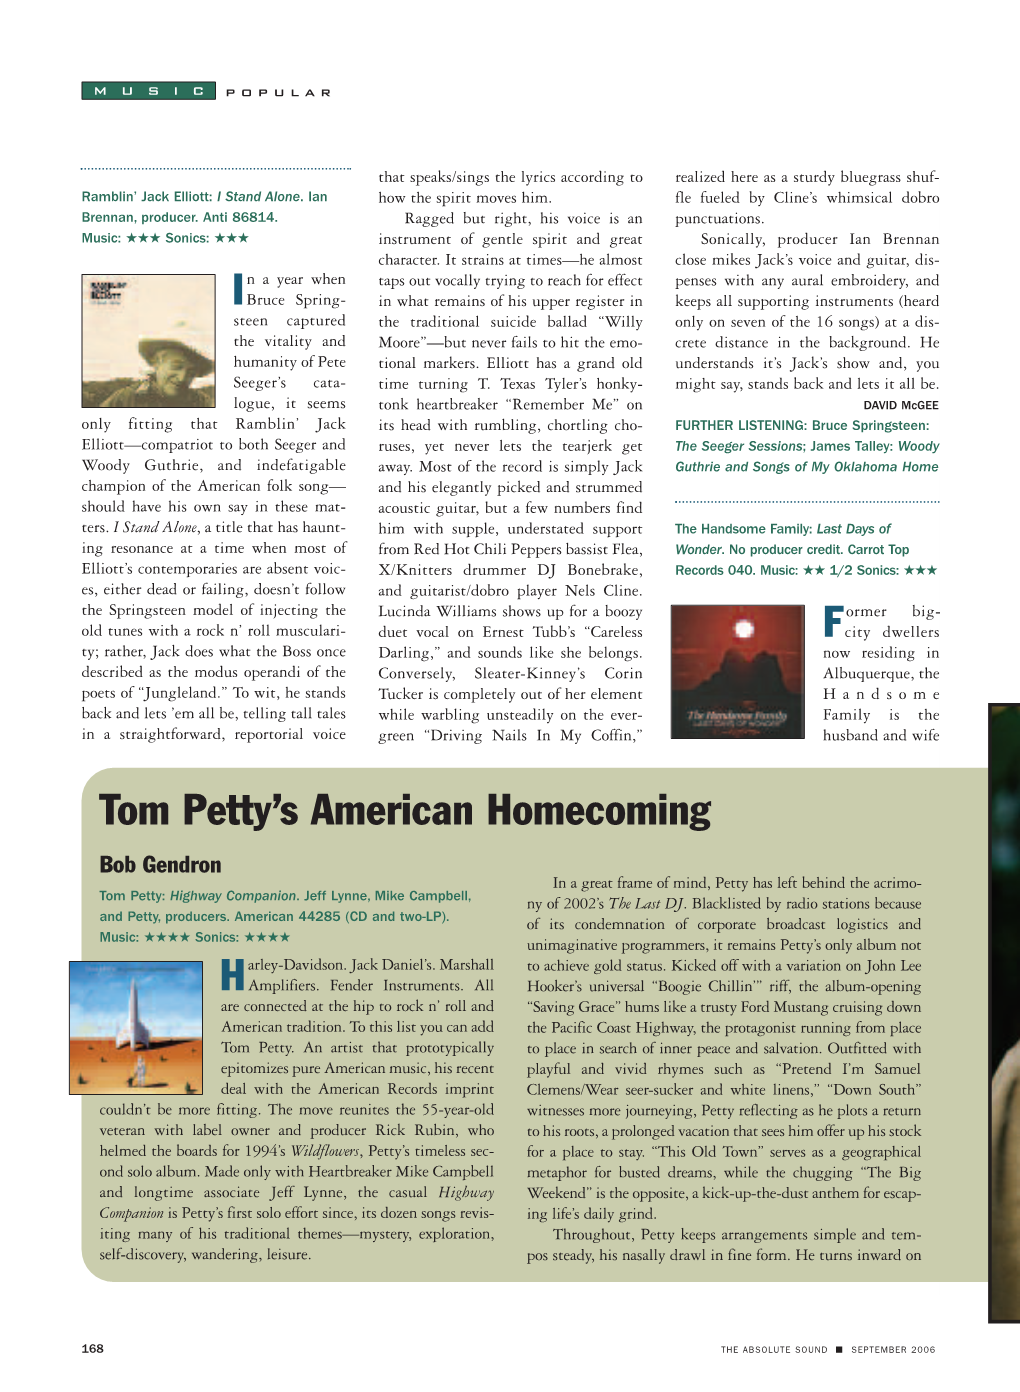 Tom Petty's American Homecoming